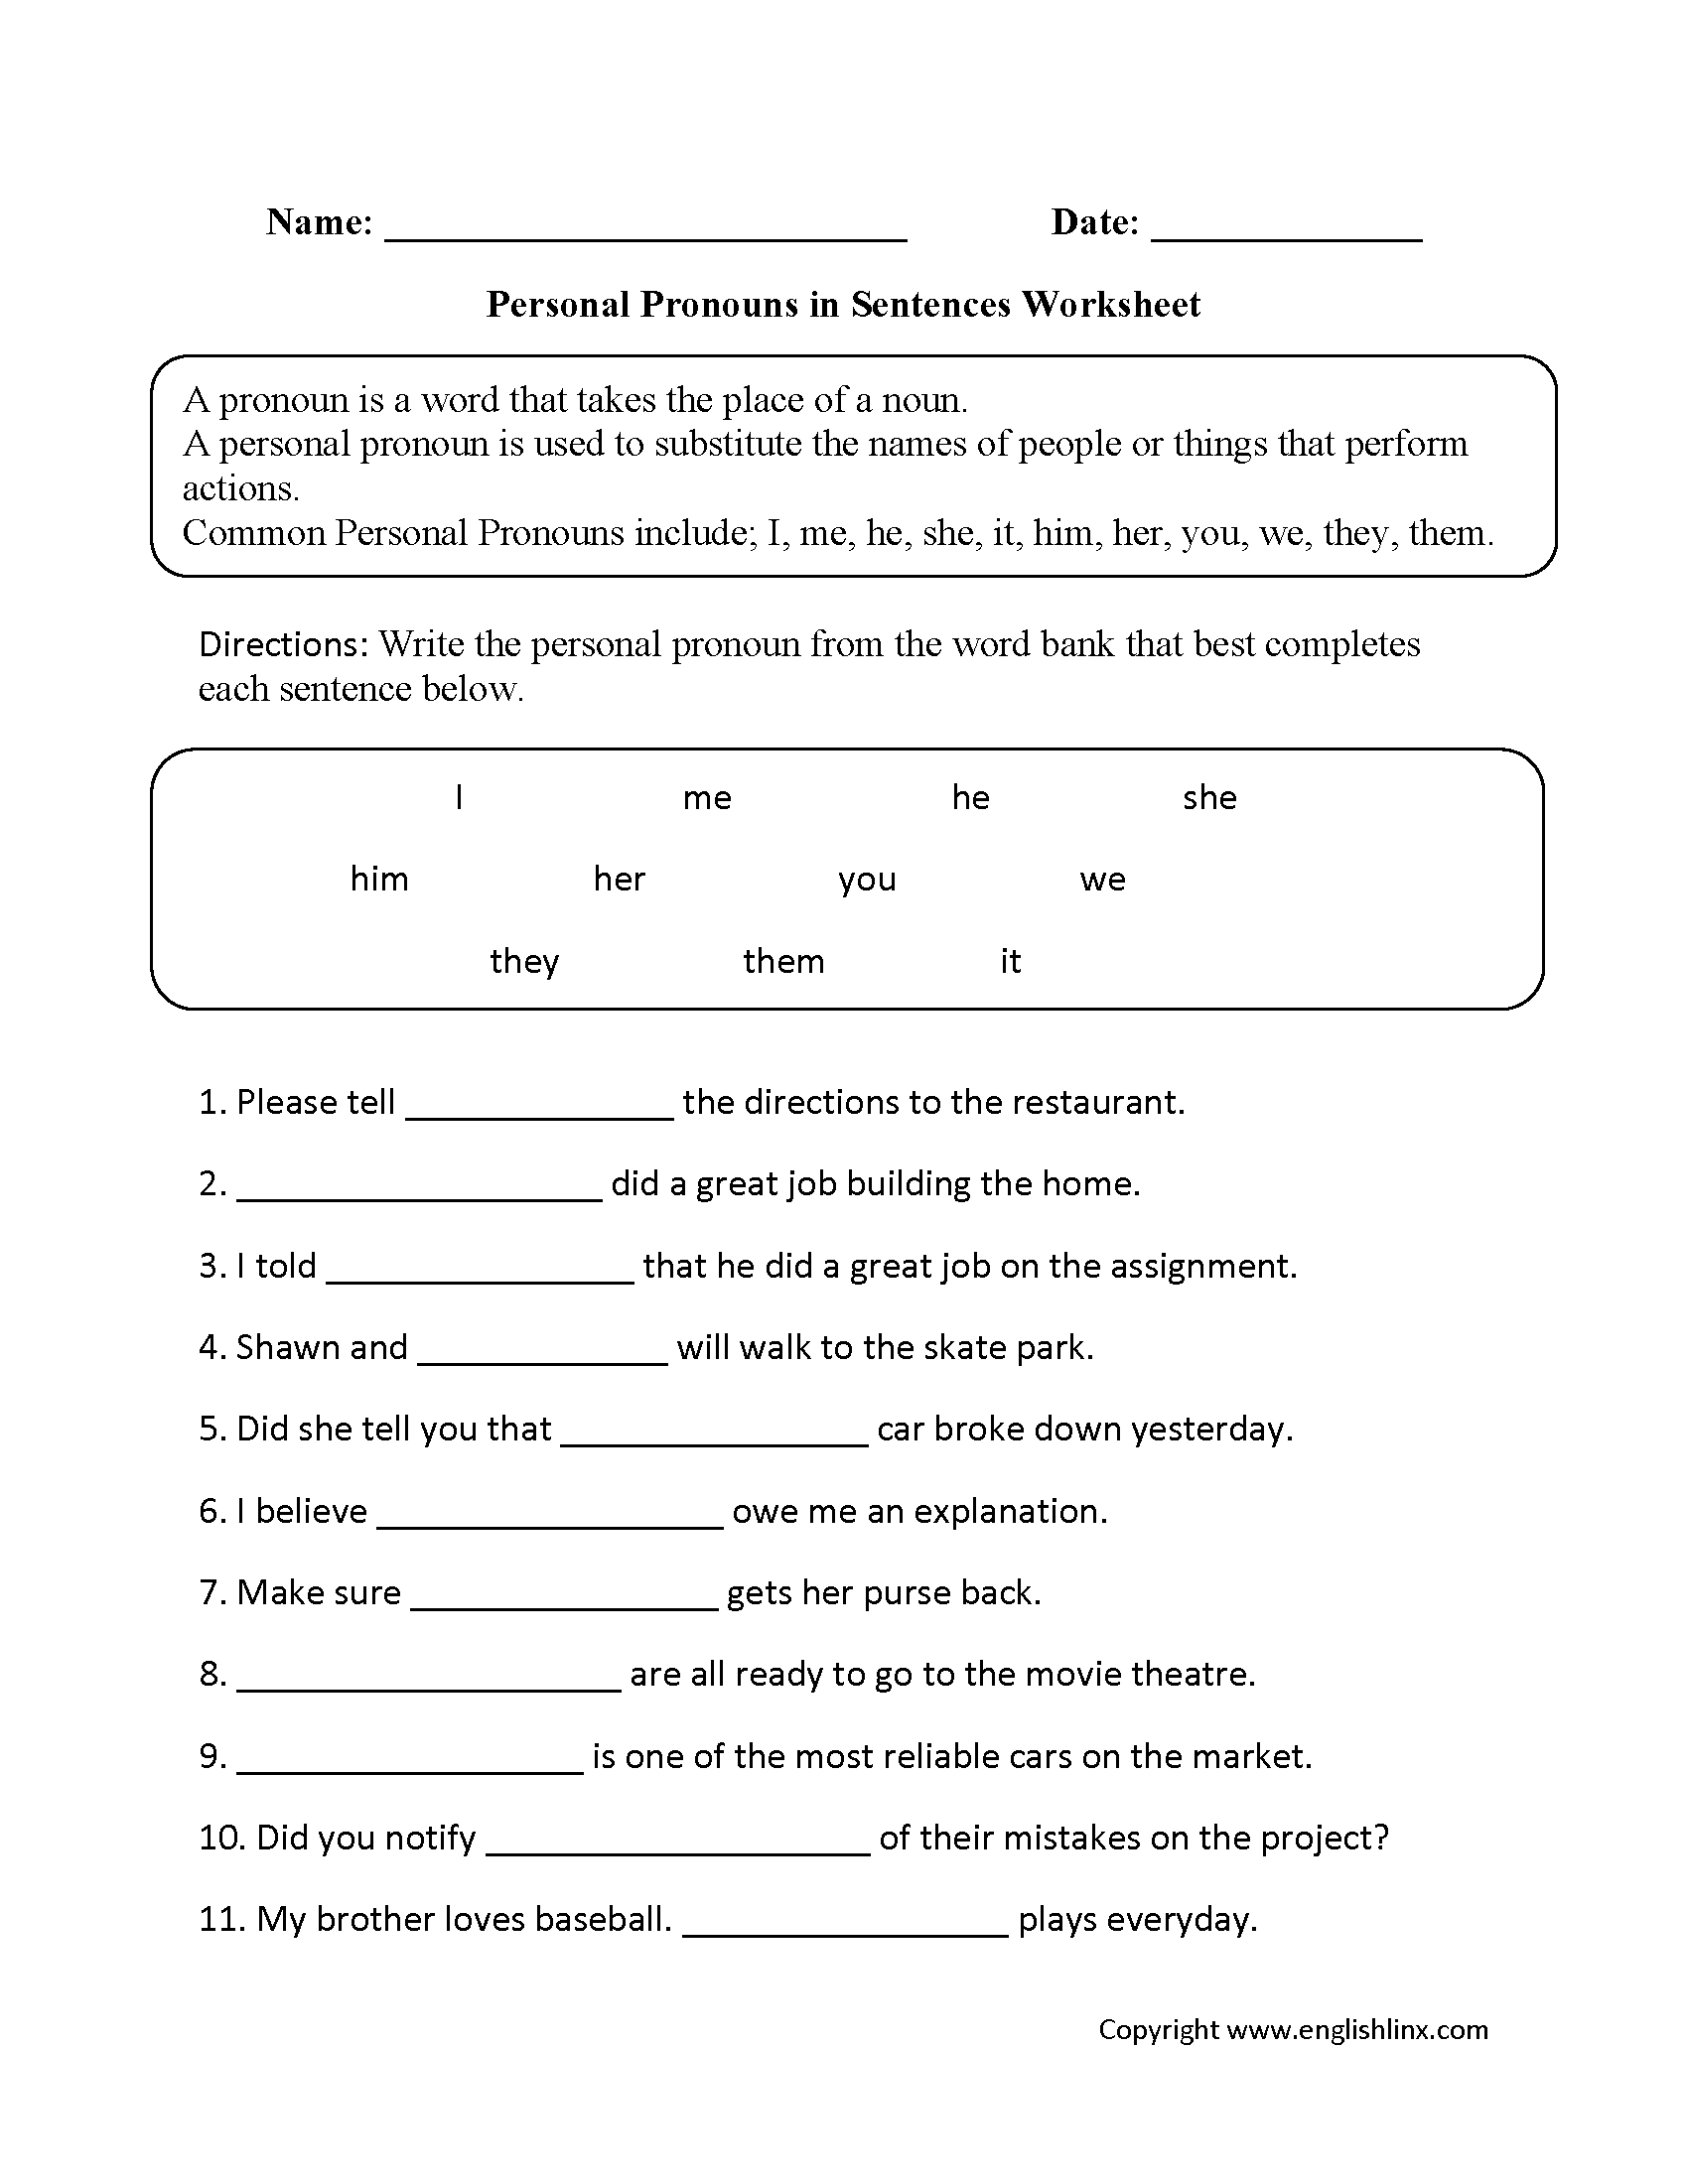 Personal Pronoun Worksheet